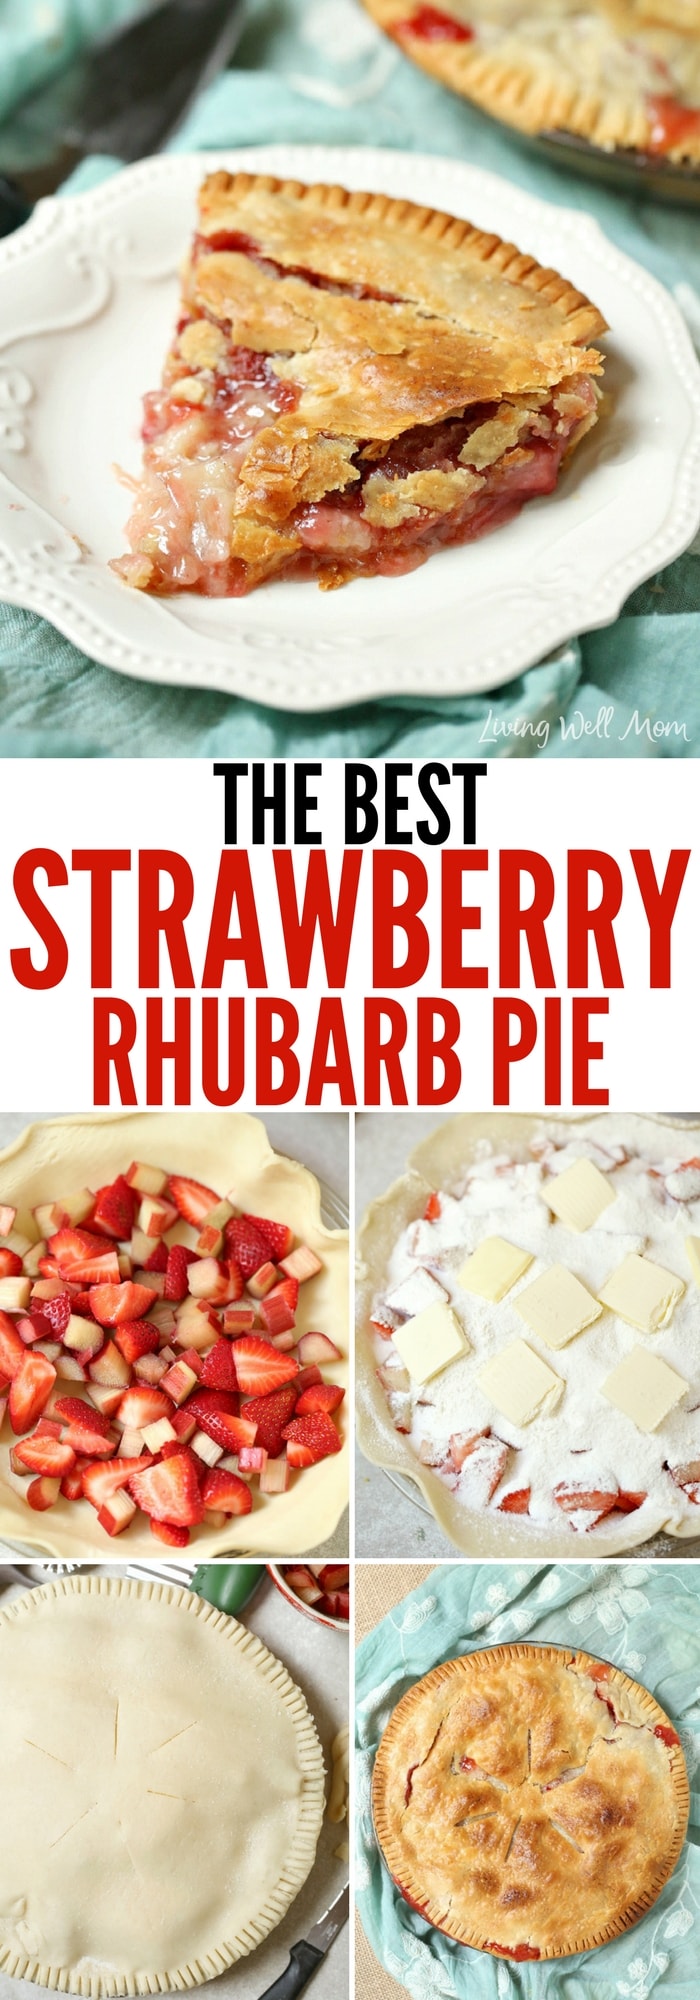 the best strawberry rhubarb pie recipe